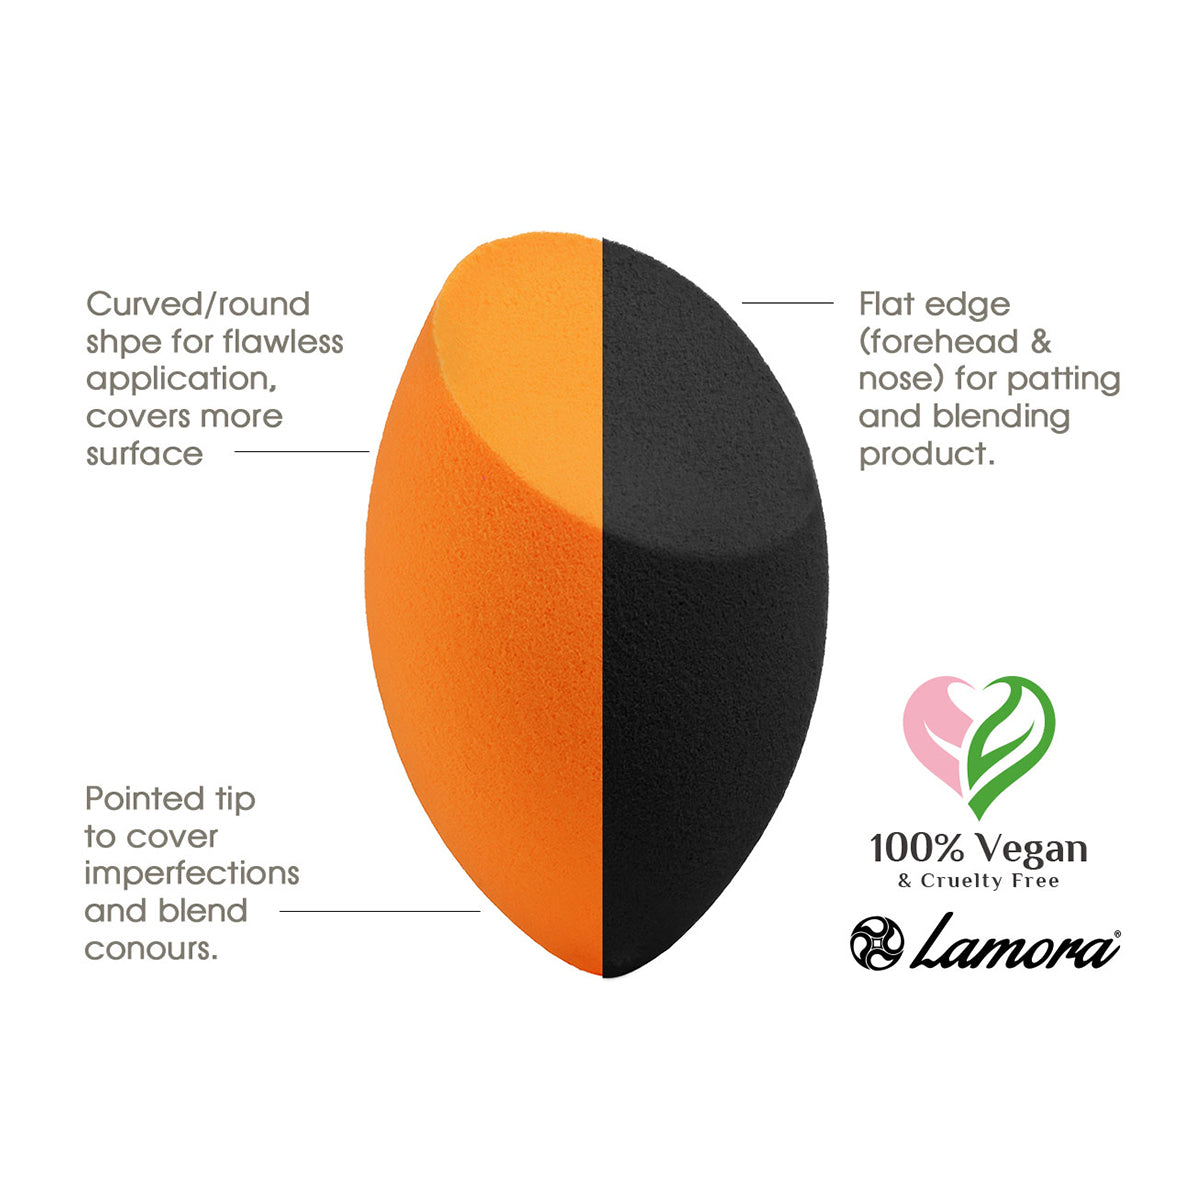 What makes a good slanted makeup blending sponge from Lamora Beauty